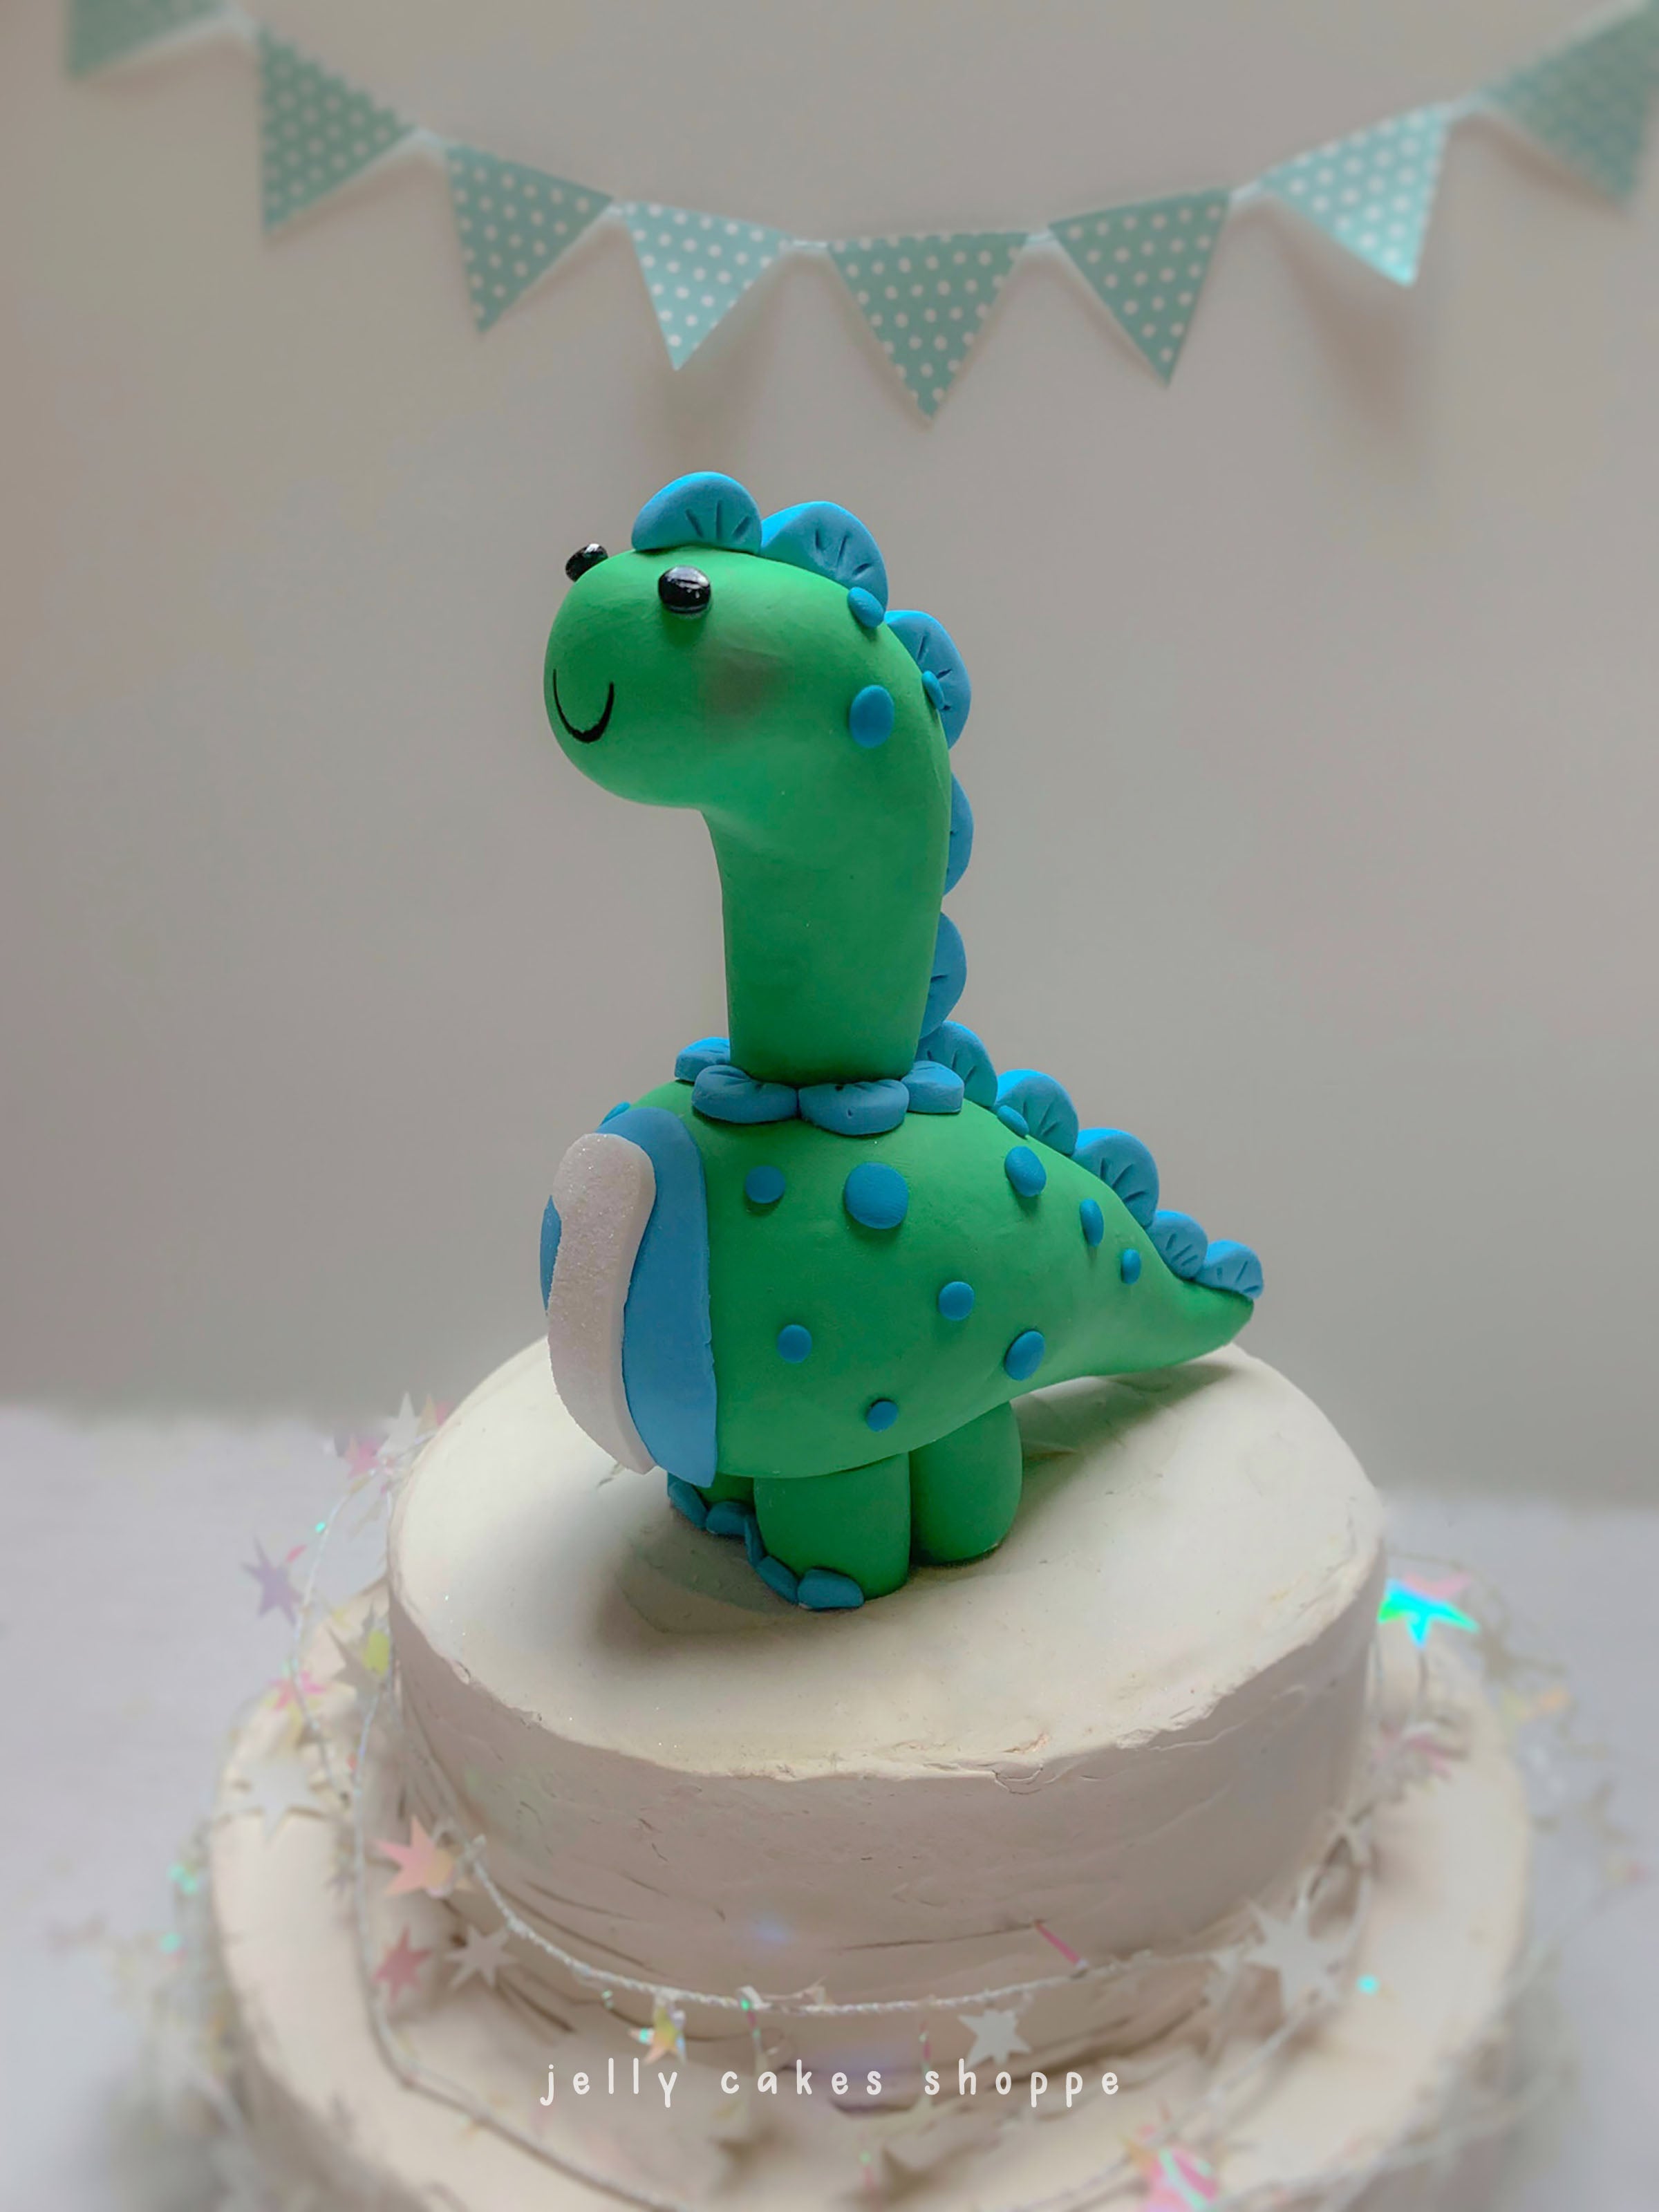 Dino-cake-design: torte con dinosauri!